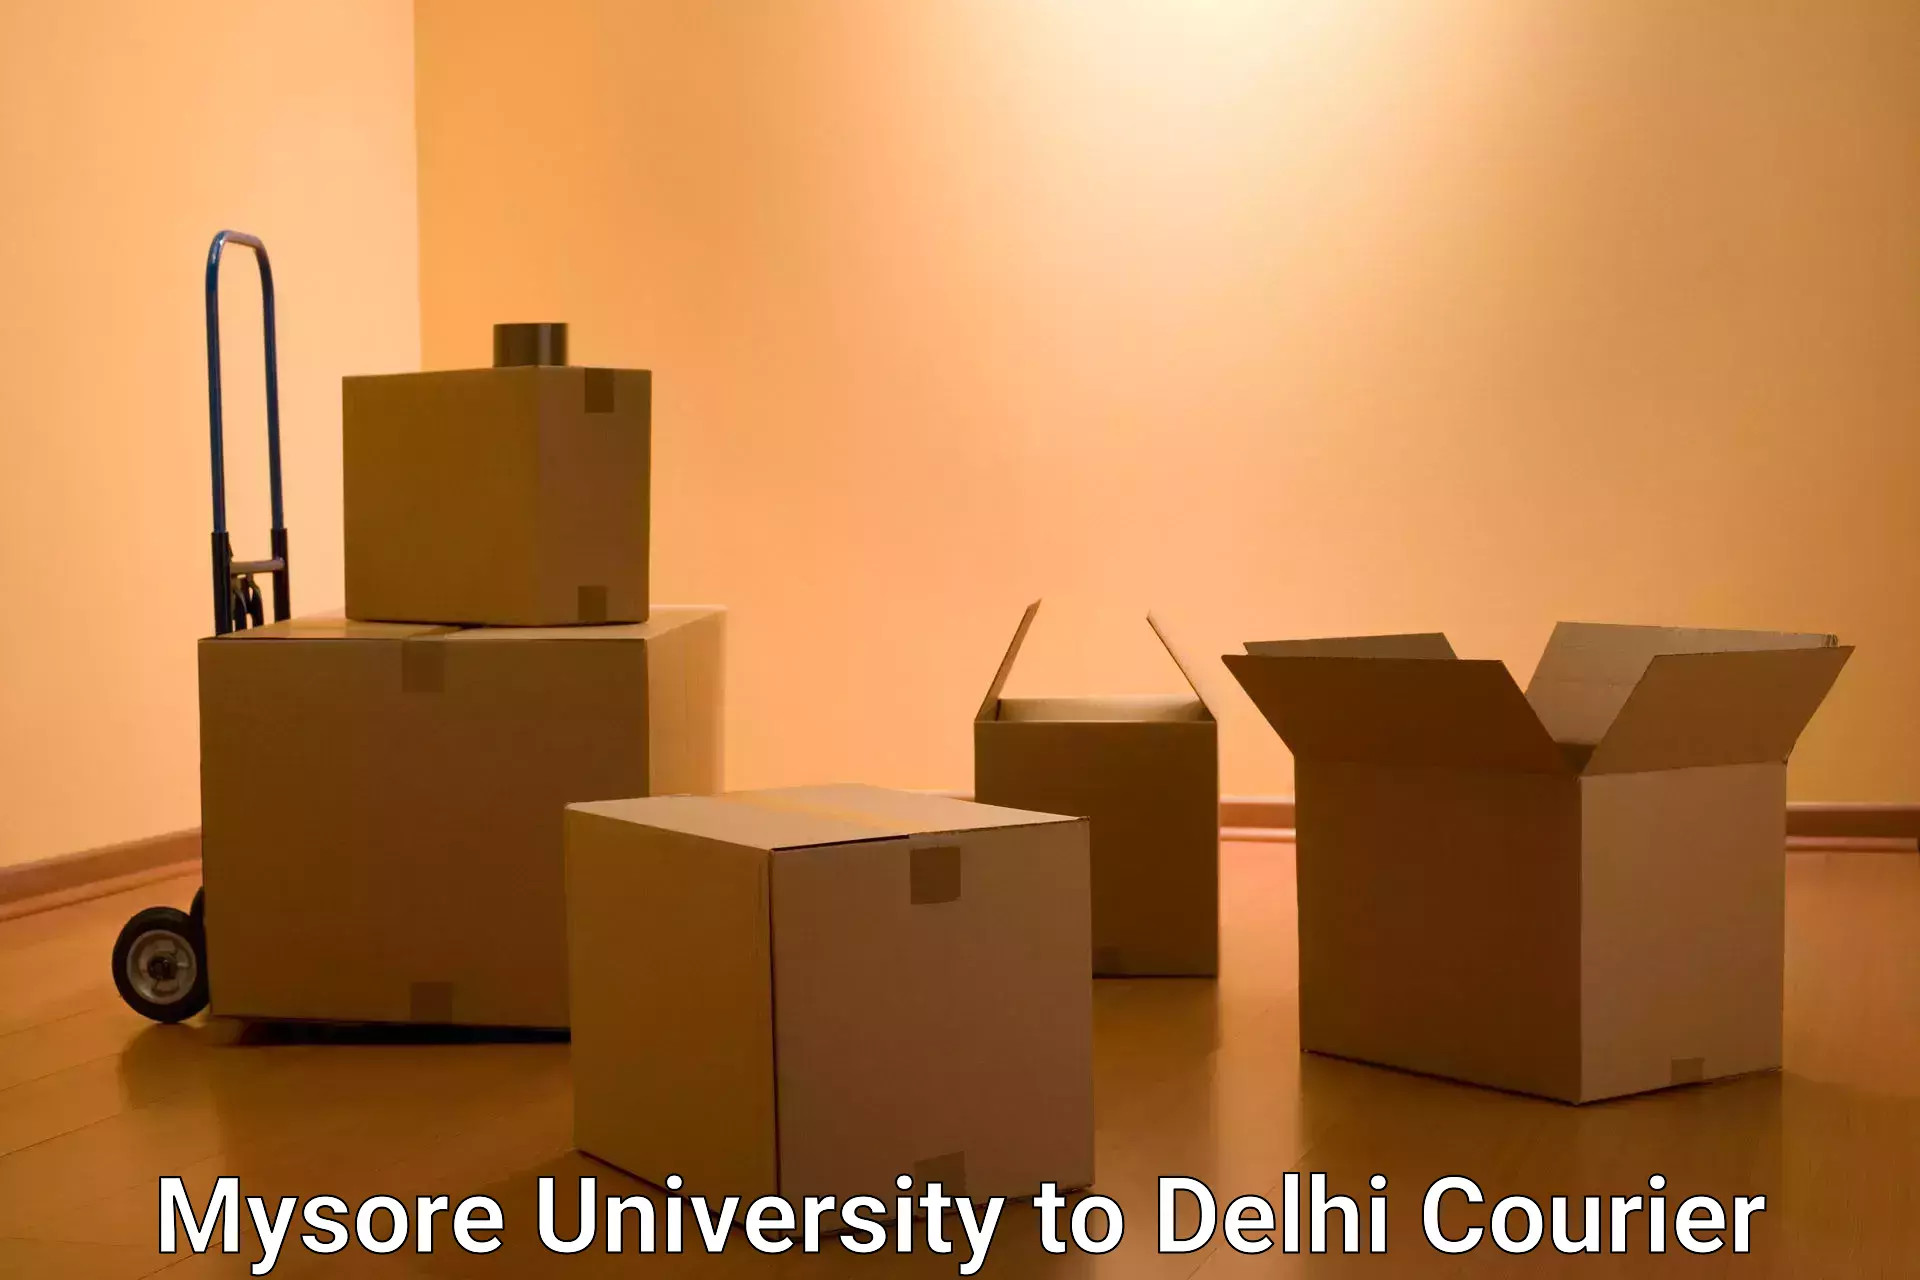 Short distance delivery Mysore University to University of Delhi